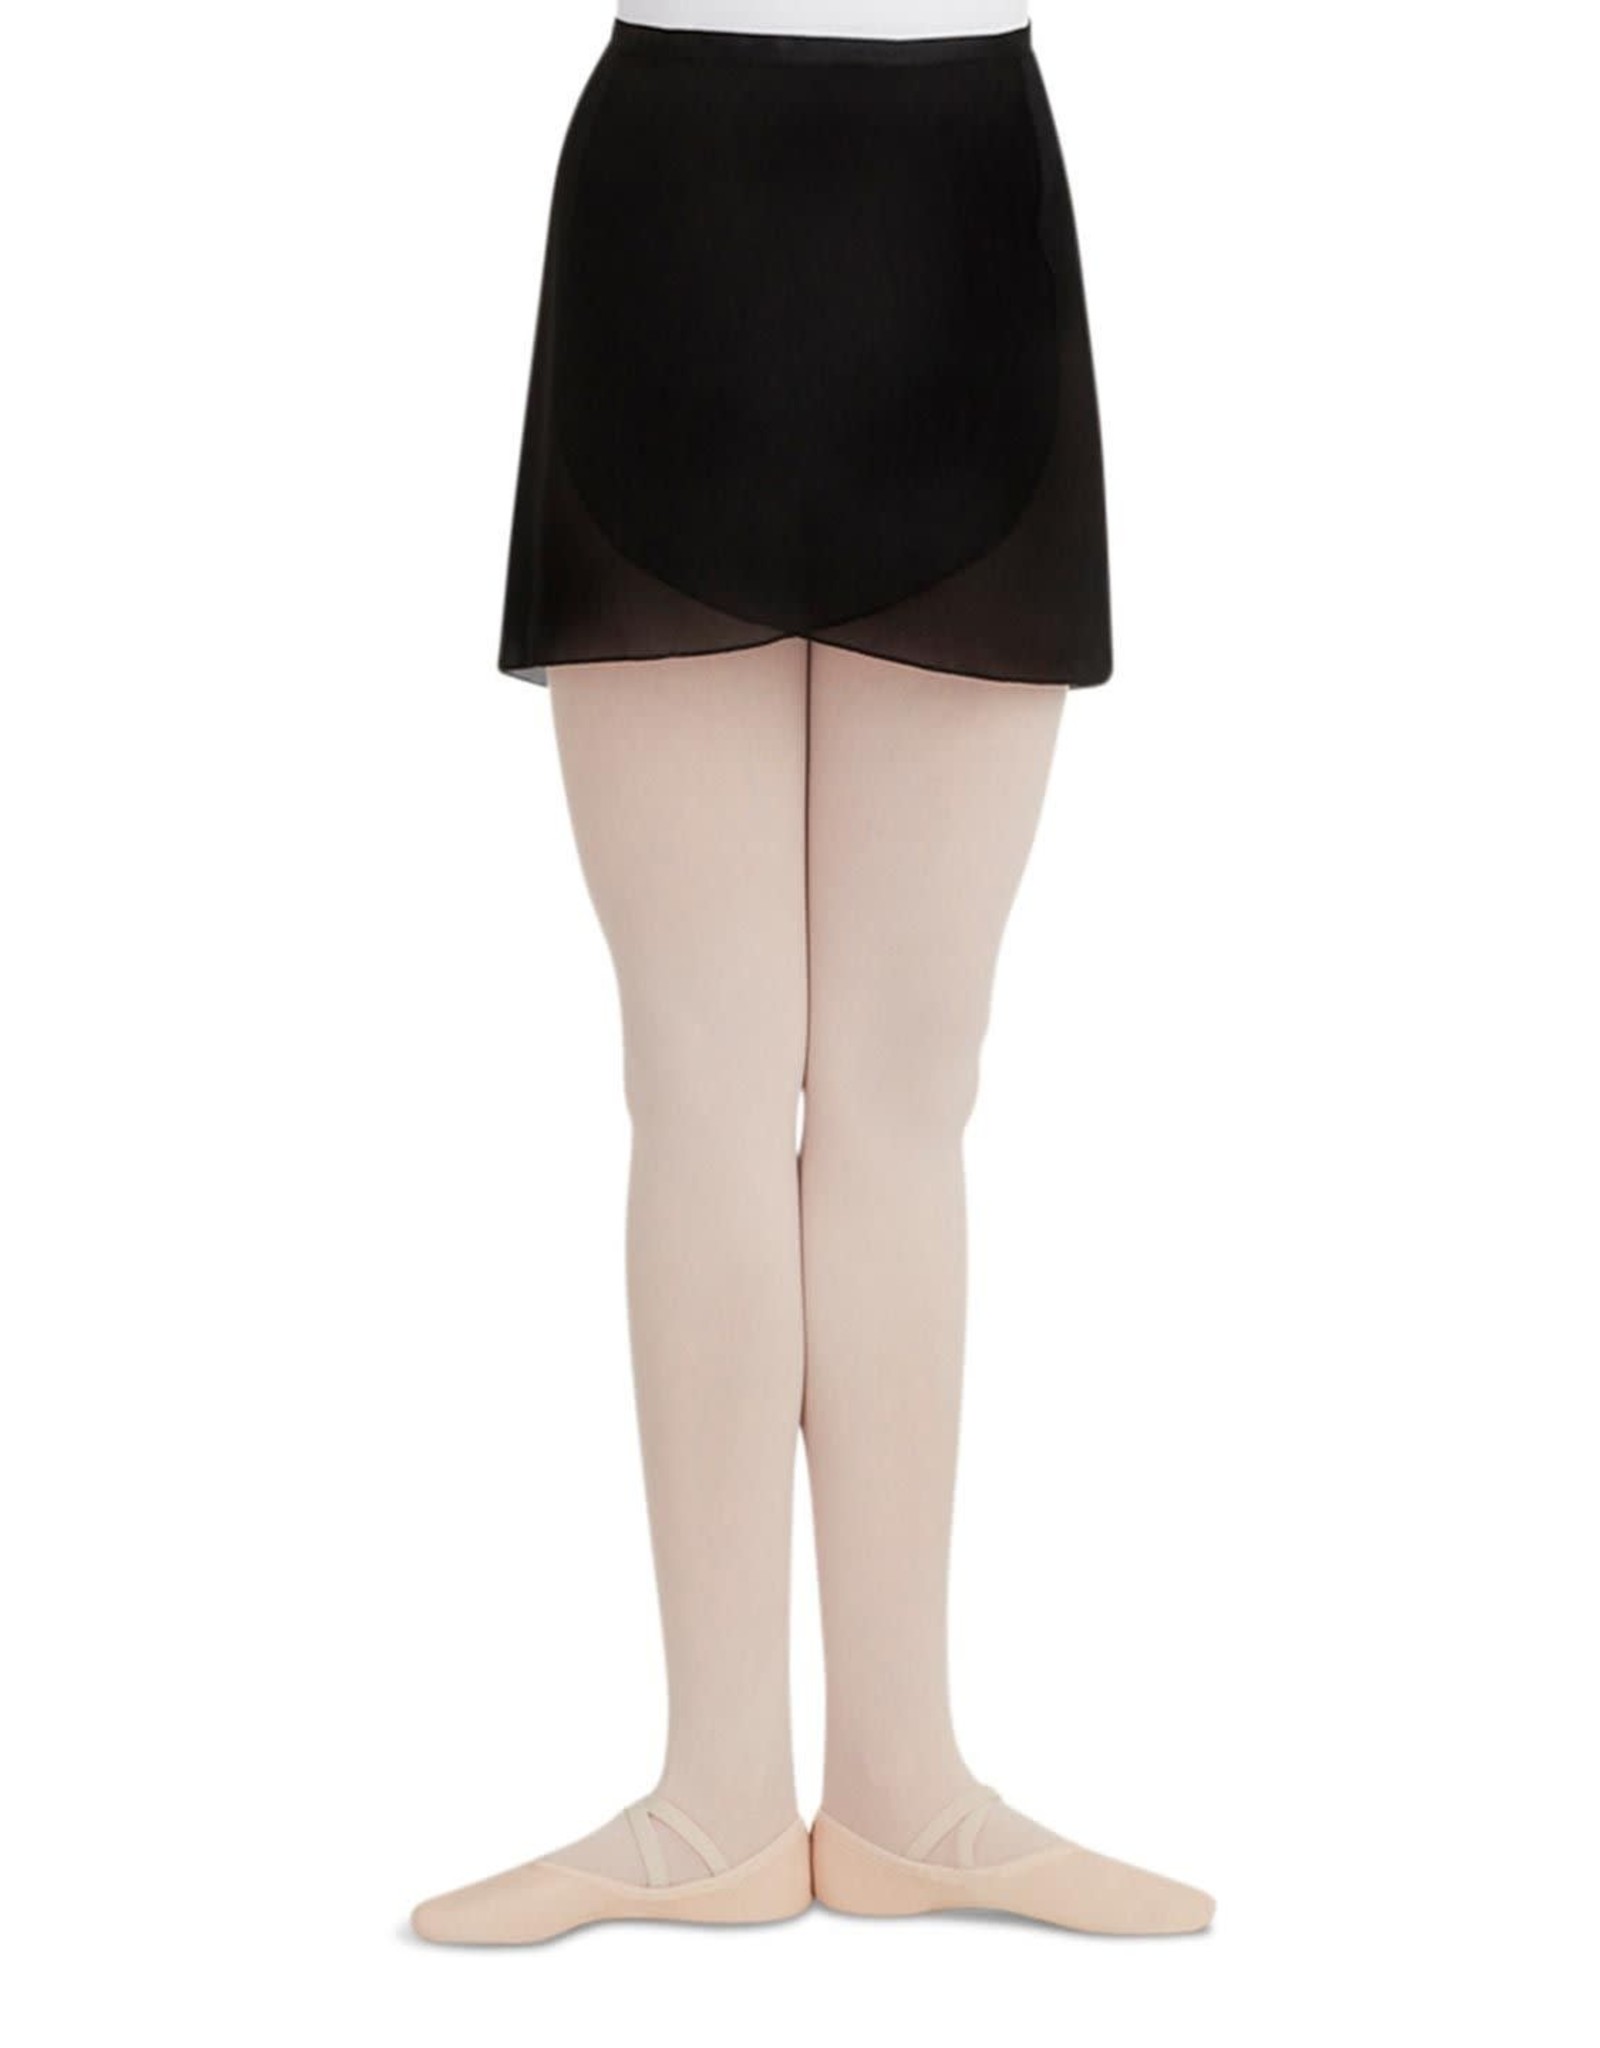 Capezio Elegant Black Georgette Wrap Skirt